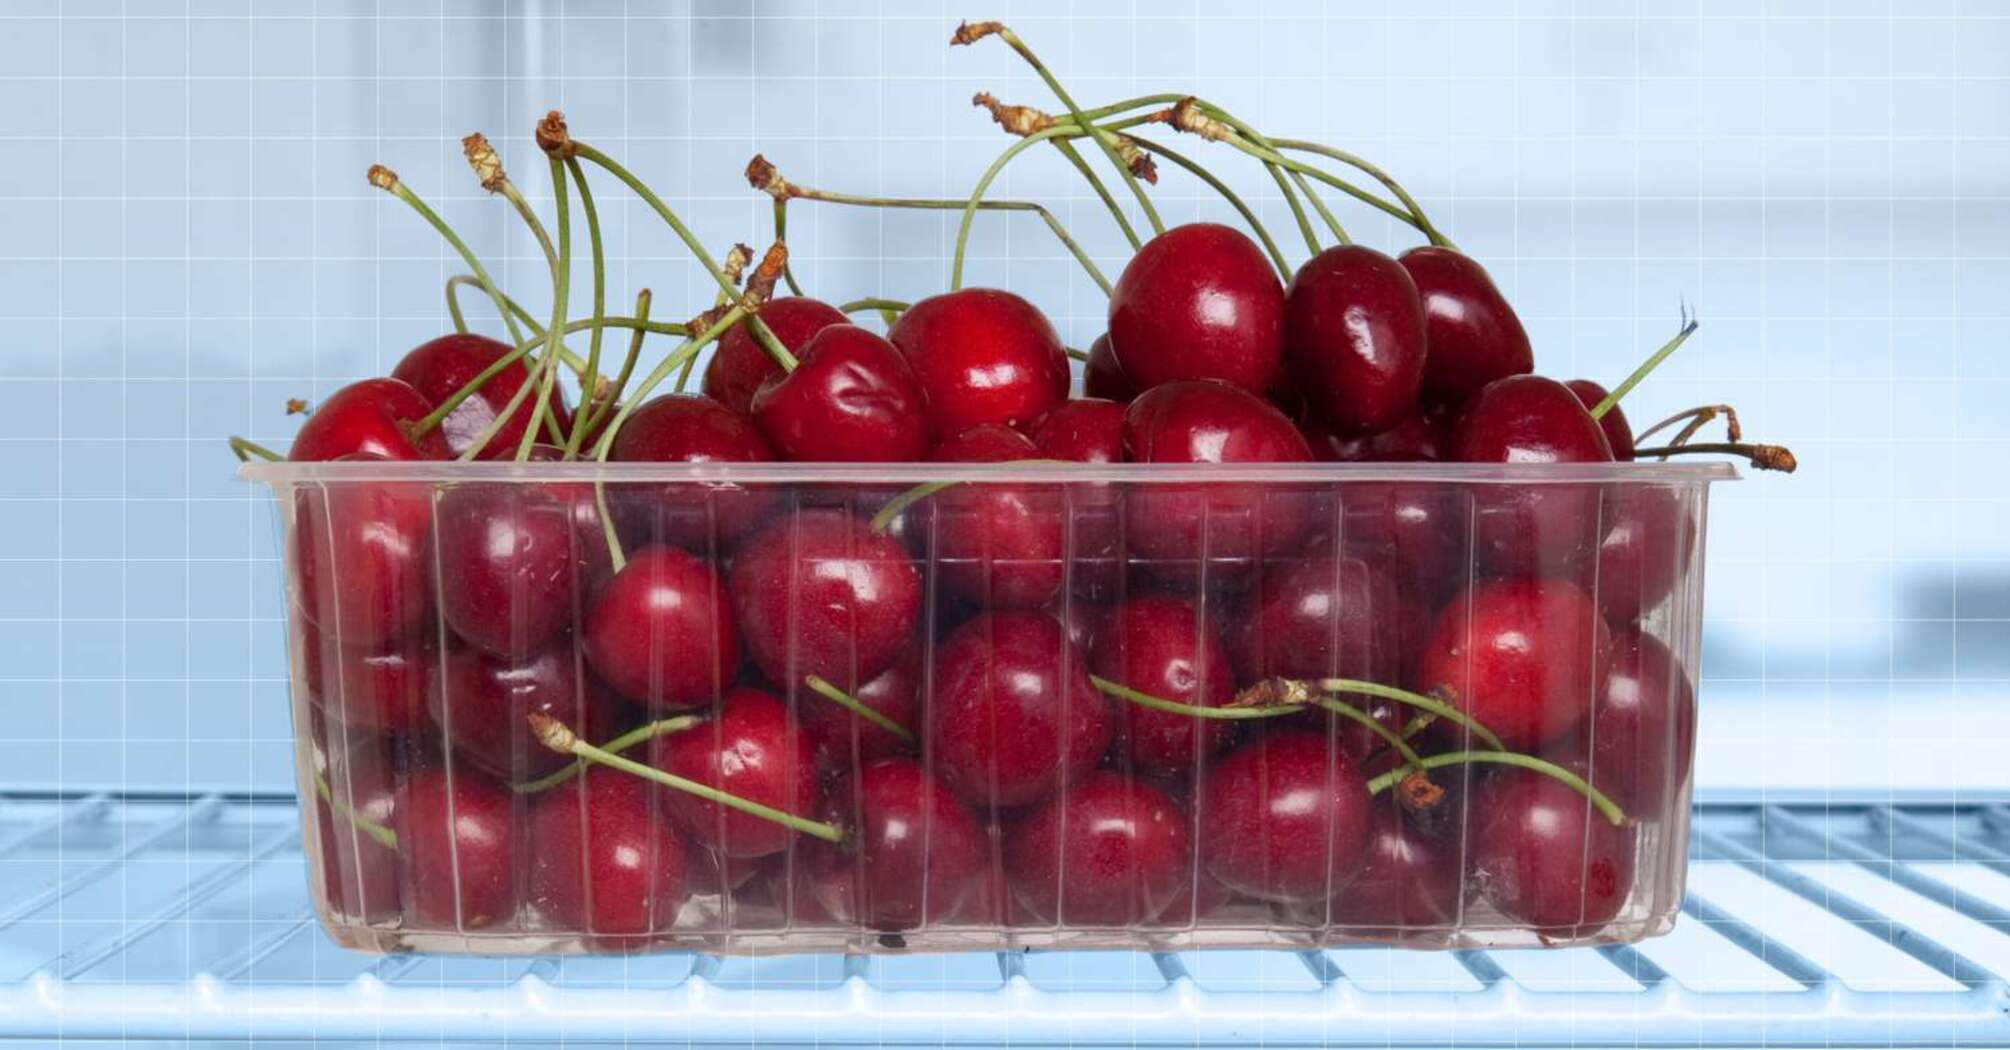 How to properly store cherries